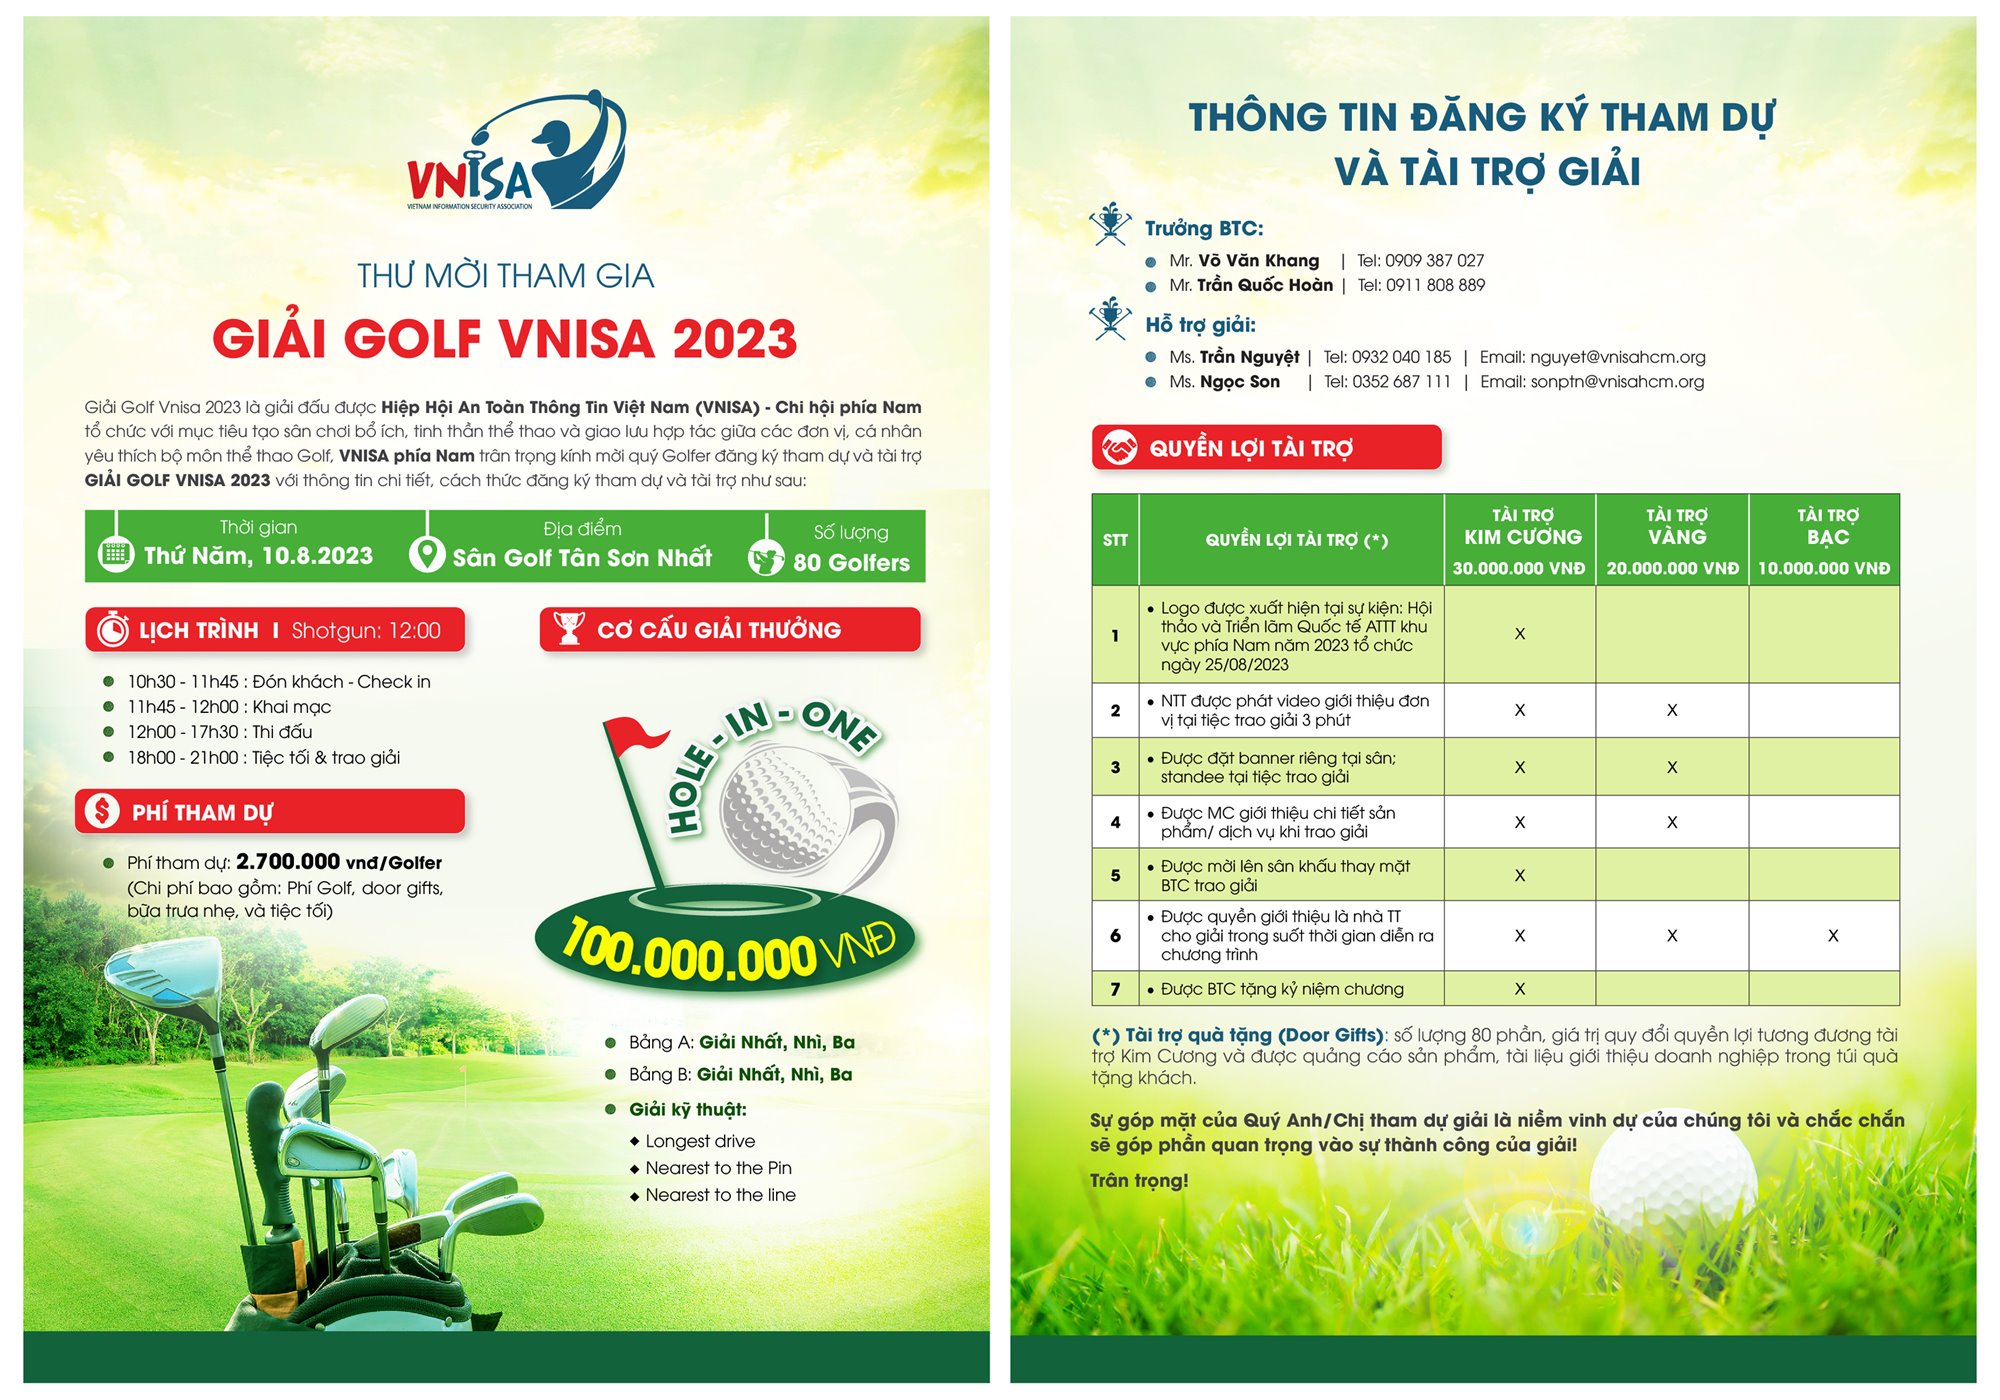 Vnisa-phia-Nam_Giai-Golf-2023-(1).jpg